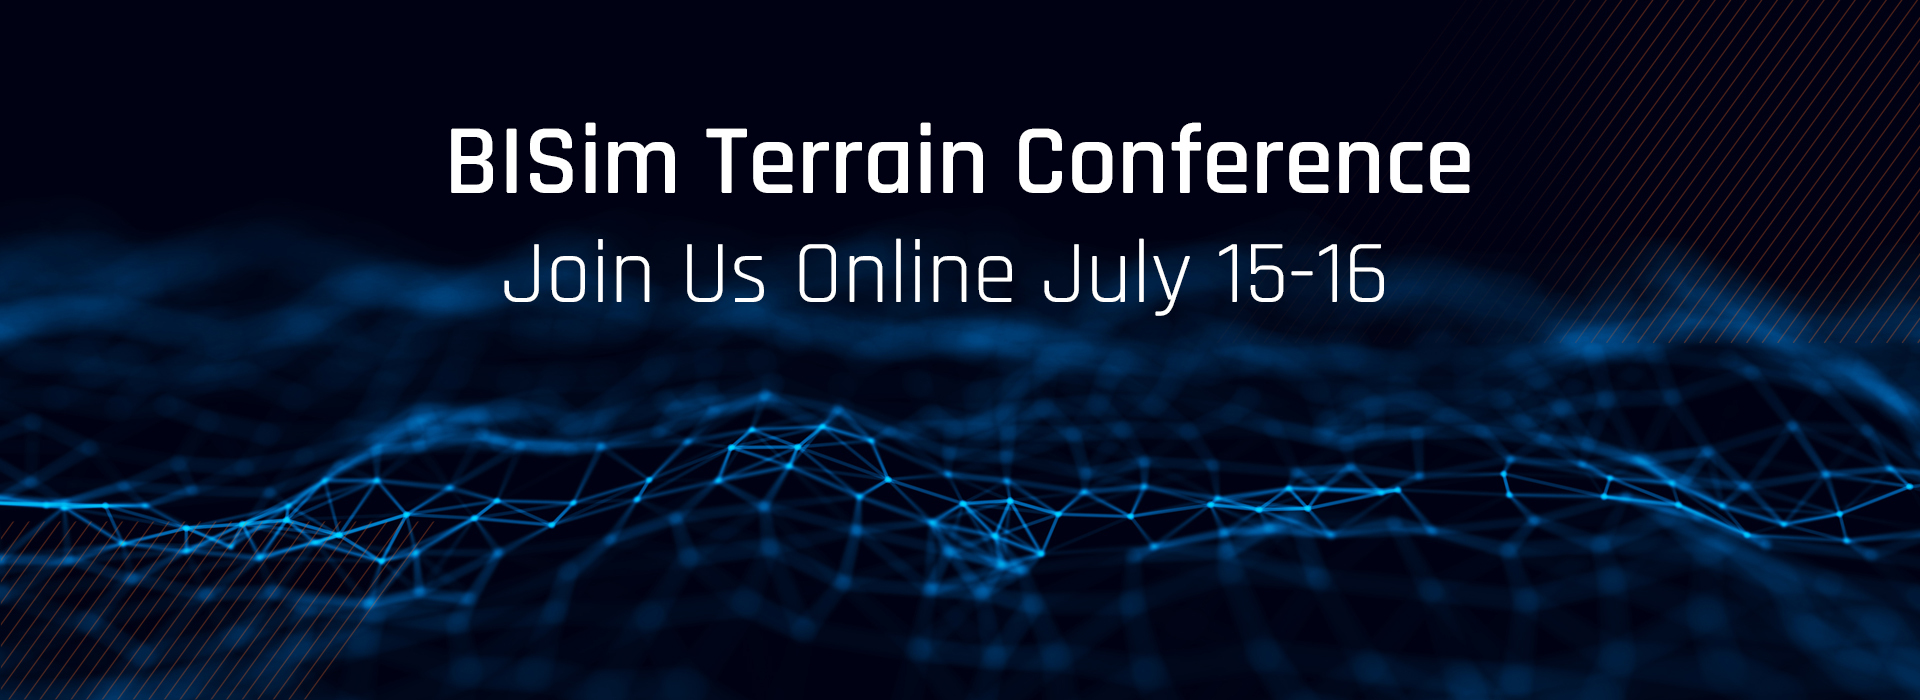 bisim_terrain_conference